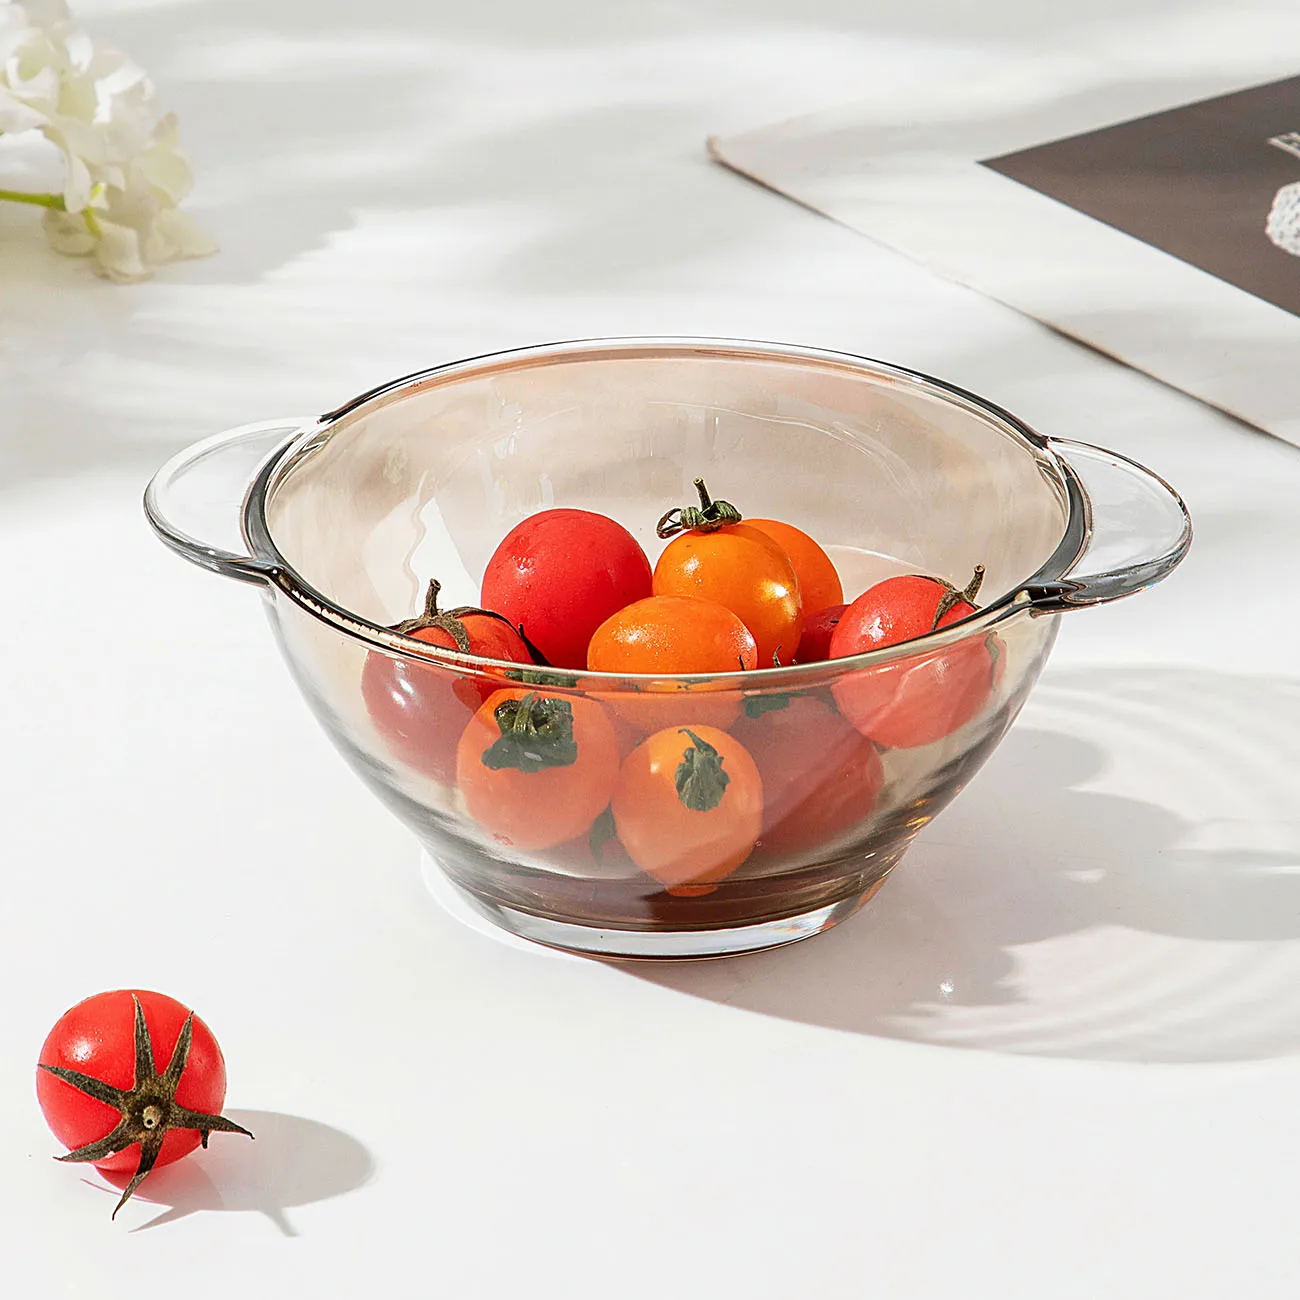 https://ae01.alicdn.com/kf/Sa7eb20294768442f9962eca2e6ae8443U/Transparent-Glass-Fruit-Salad-Bowl-with-Handle-Dessert-Ice-Cream-Bowl-Household-Foods-Mixing-Bowls.jpg